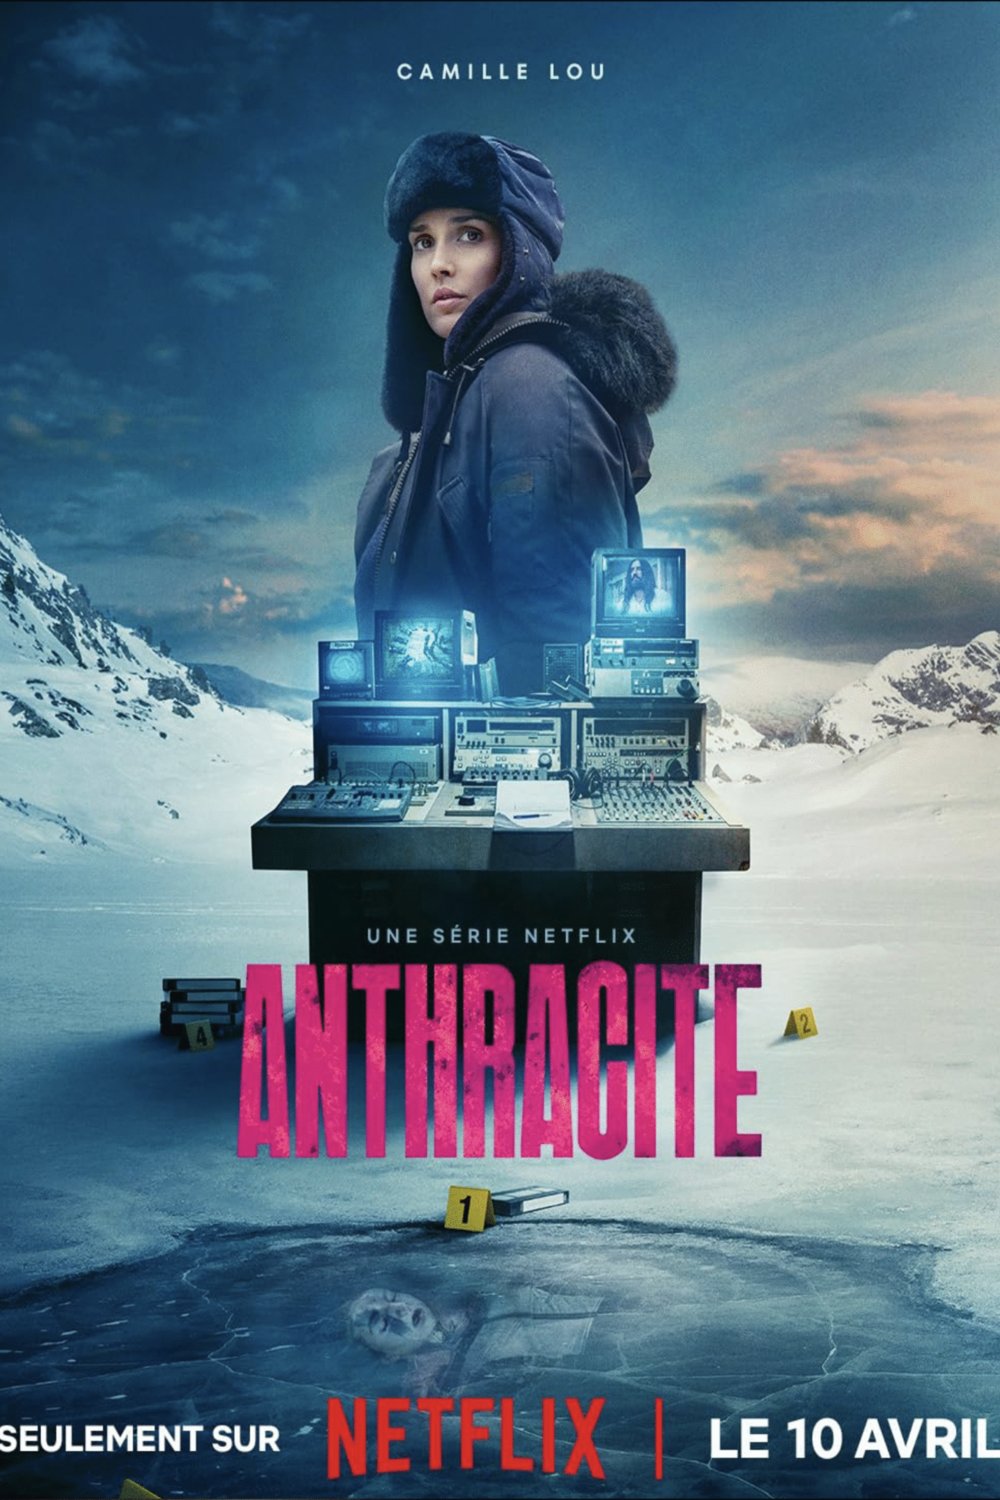 L'affiche du film Antracite